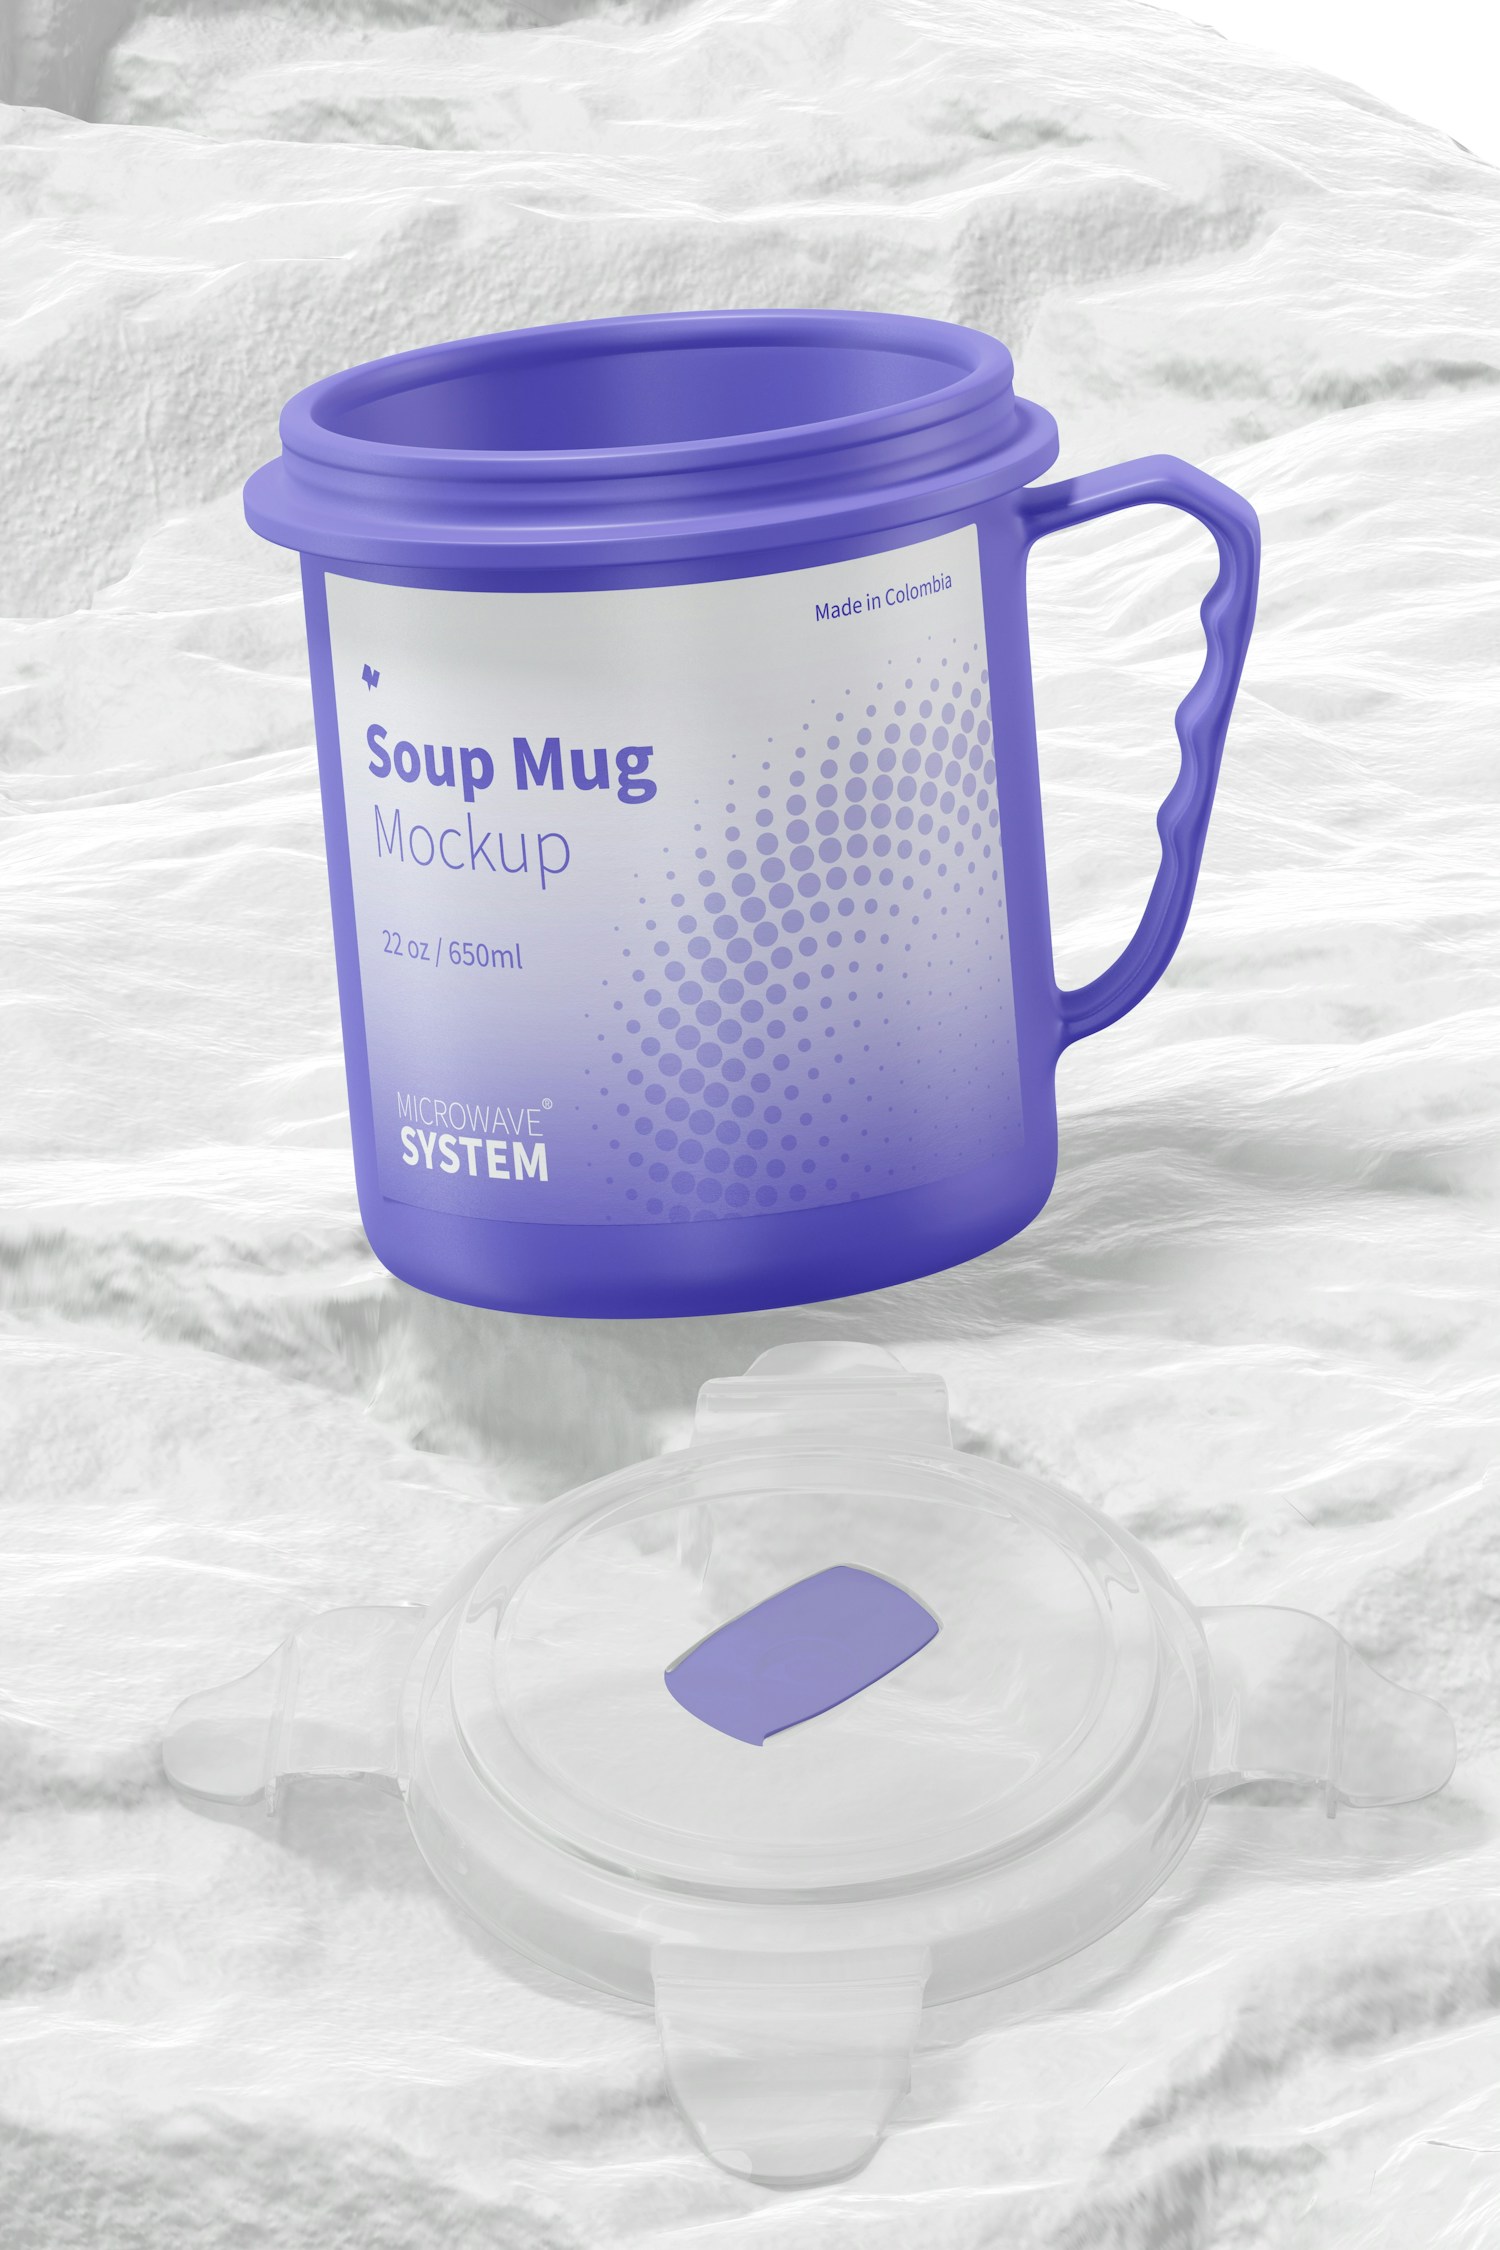 22 oz Soup Mug Mockup, Opened